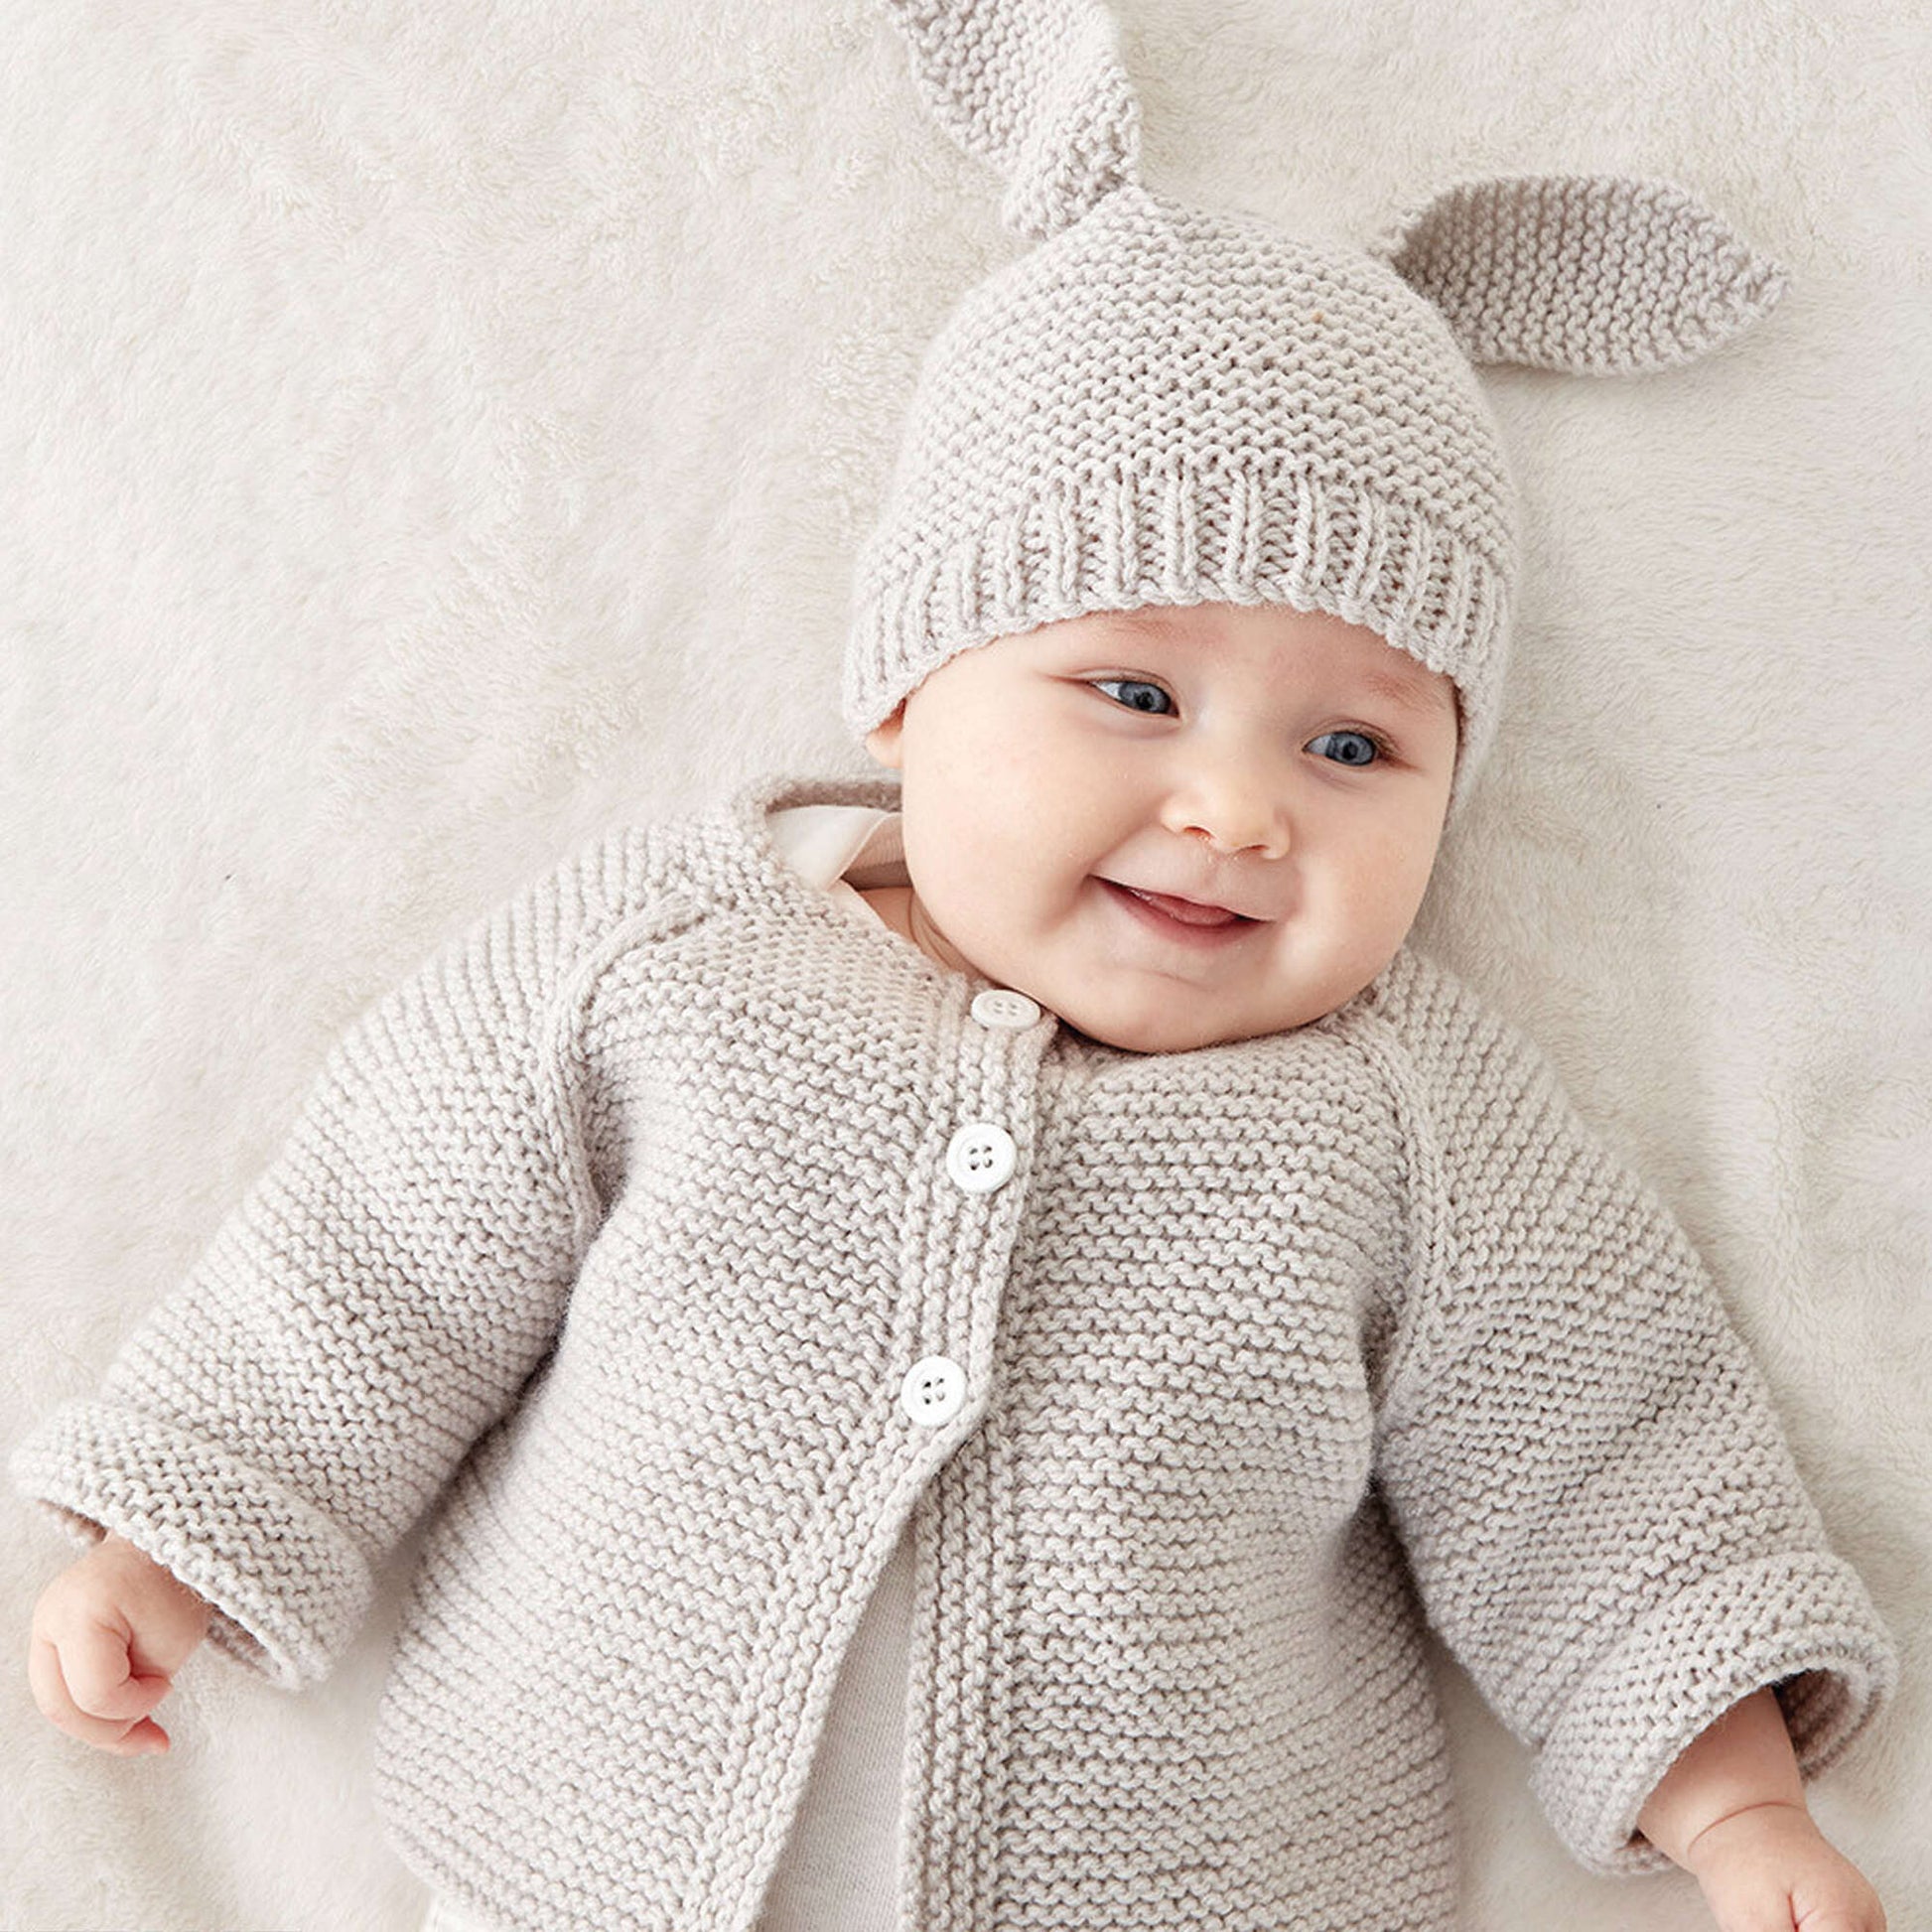 Free Bernat Knit Baby Jacket Set Pattern